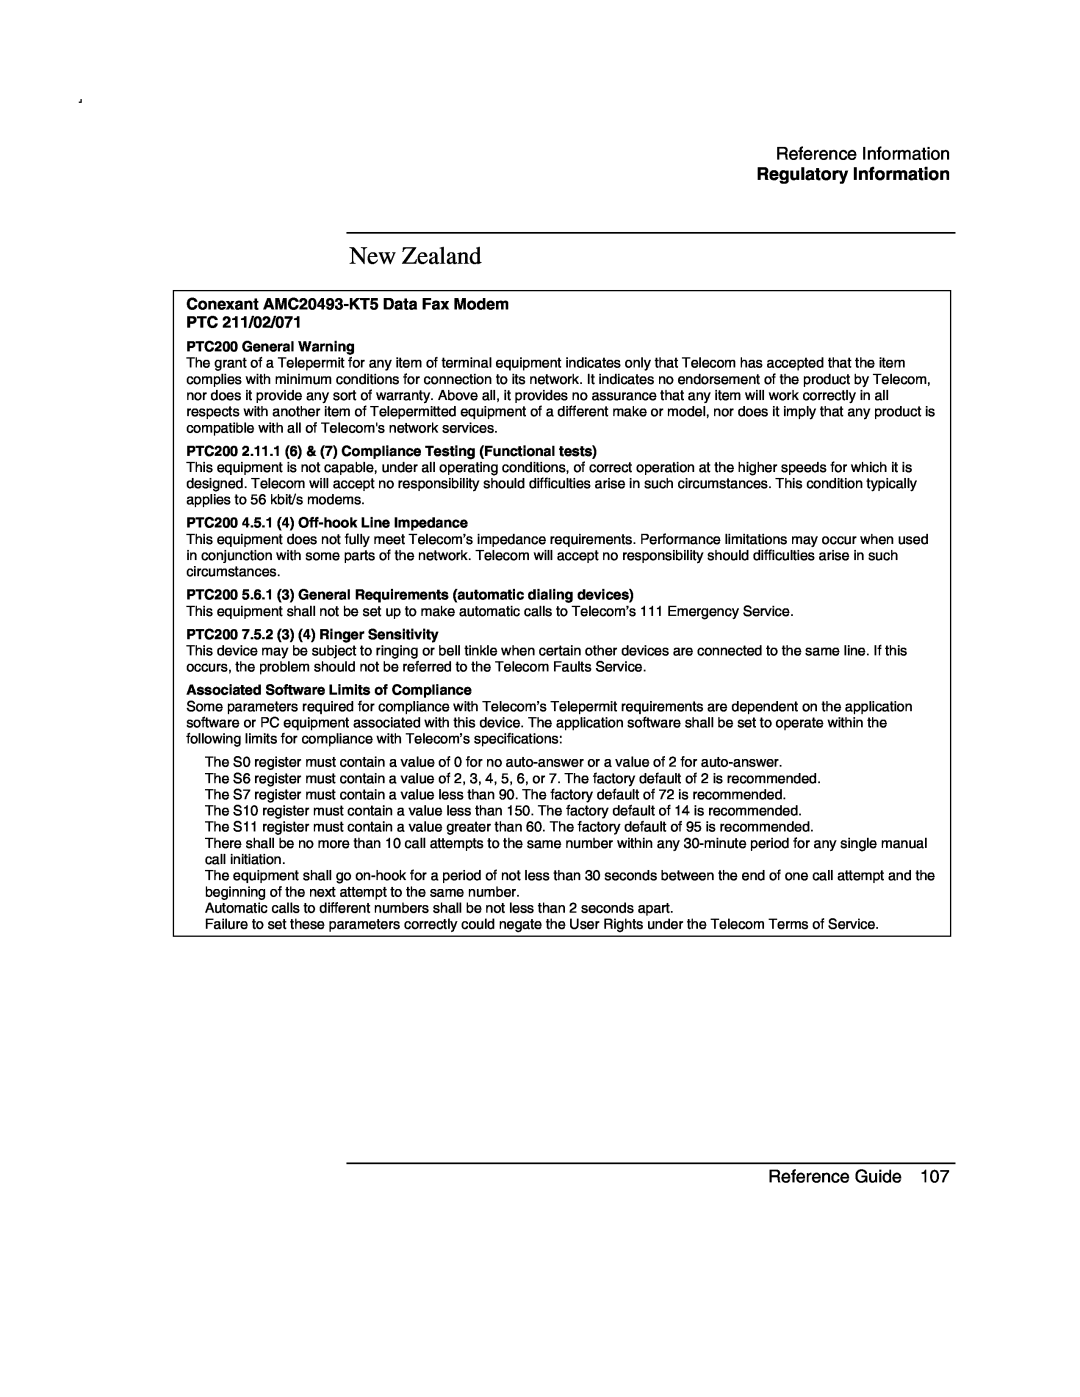 Compaq AMC20493-KT5 New Zealand, Reference Information, Regulatory Information, Reference Guide, PTC200 General Warning 